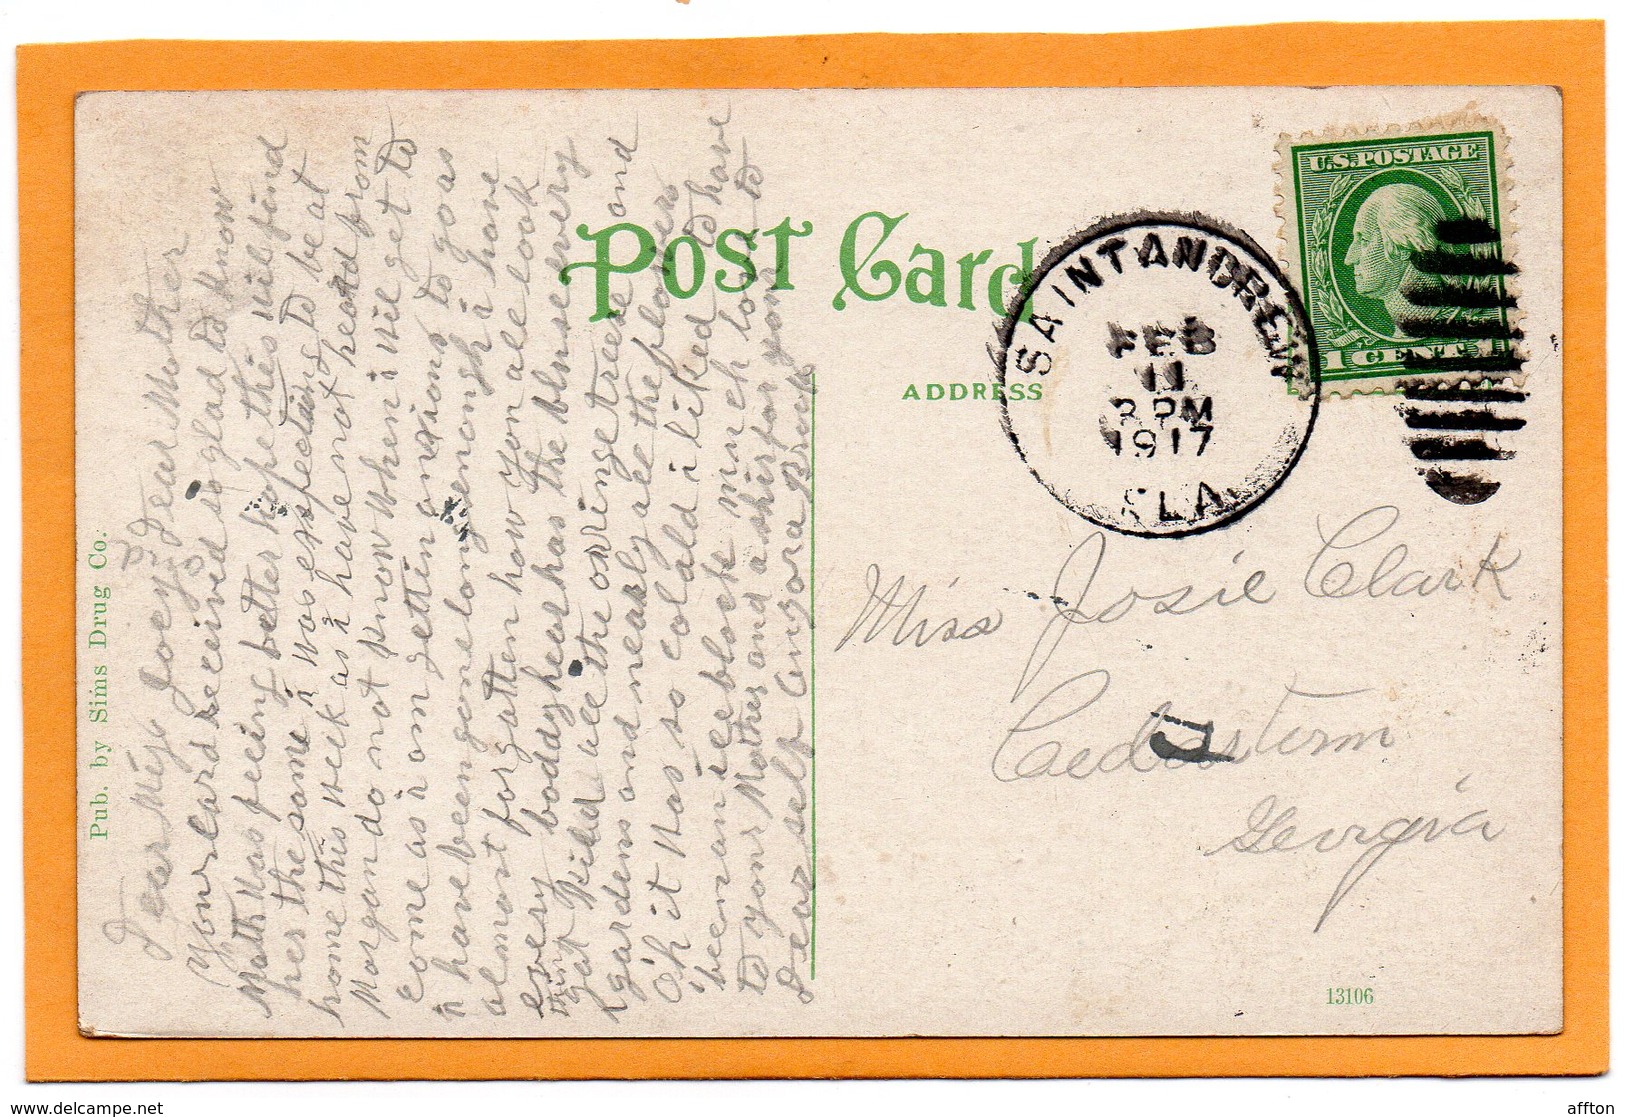 Panama City FL 1917 Postcard - Panamá City